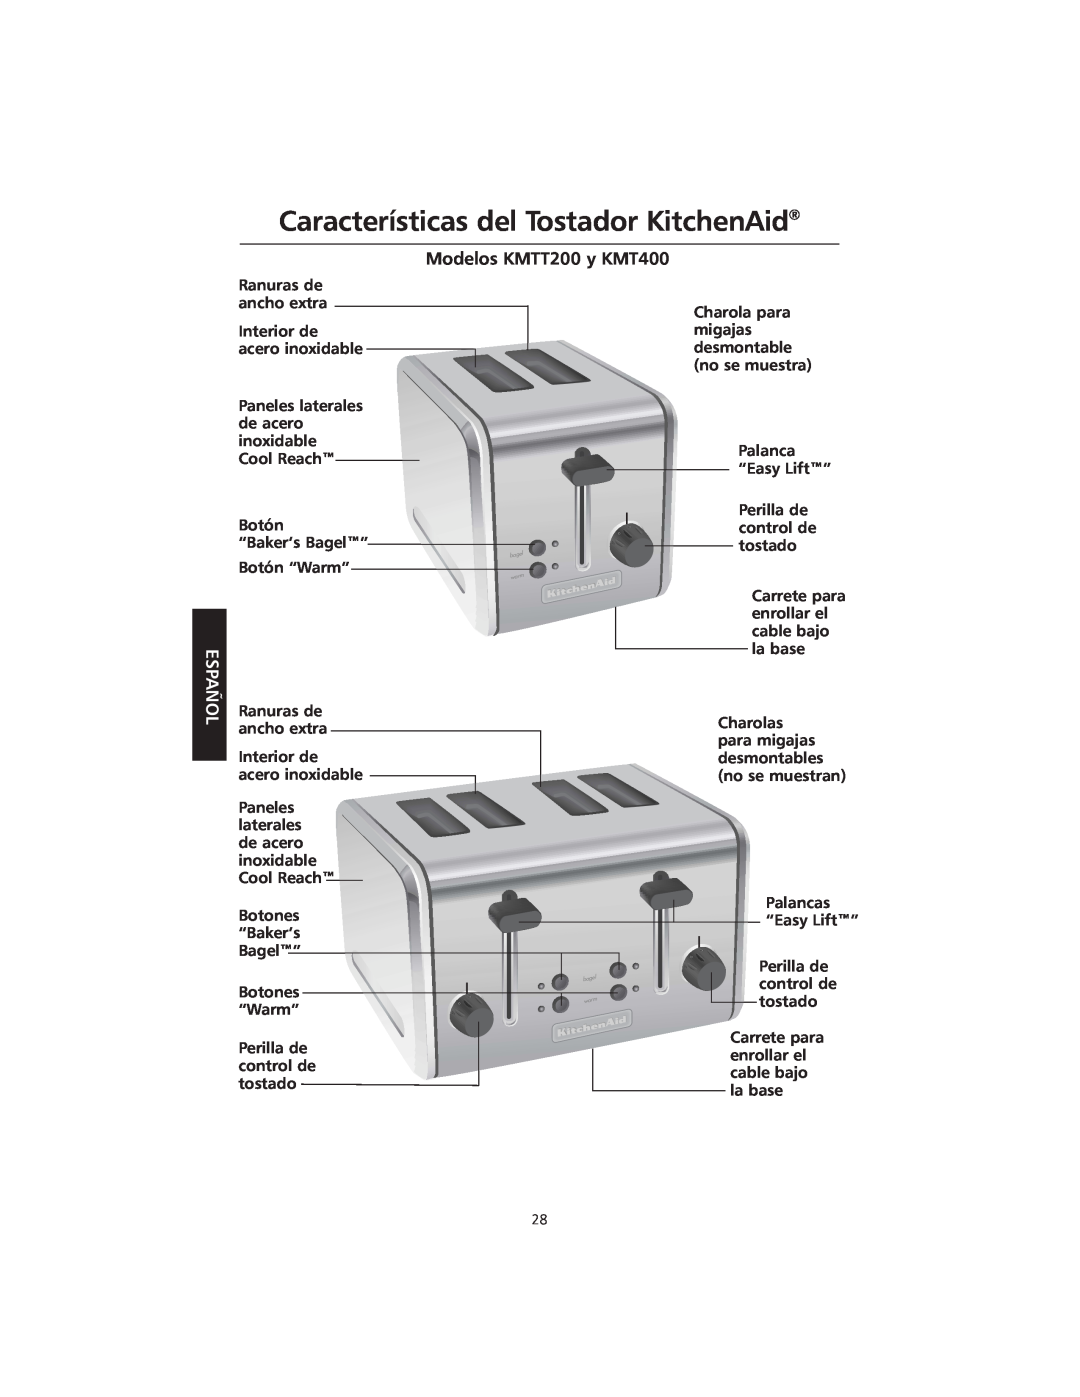 KitchenAid manual Características del Tostador KitchenAid, Modelos KMTT200 y KMT400 